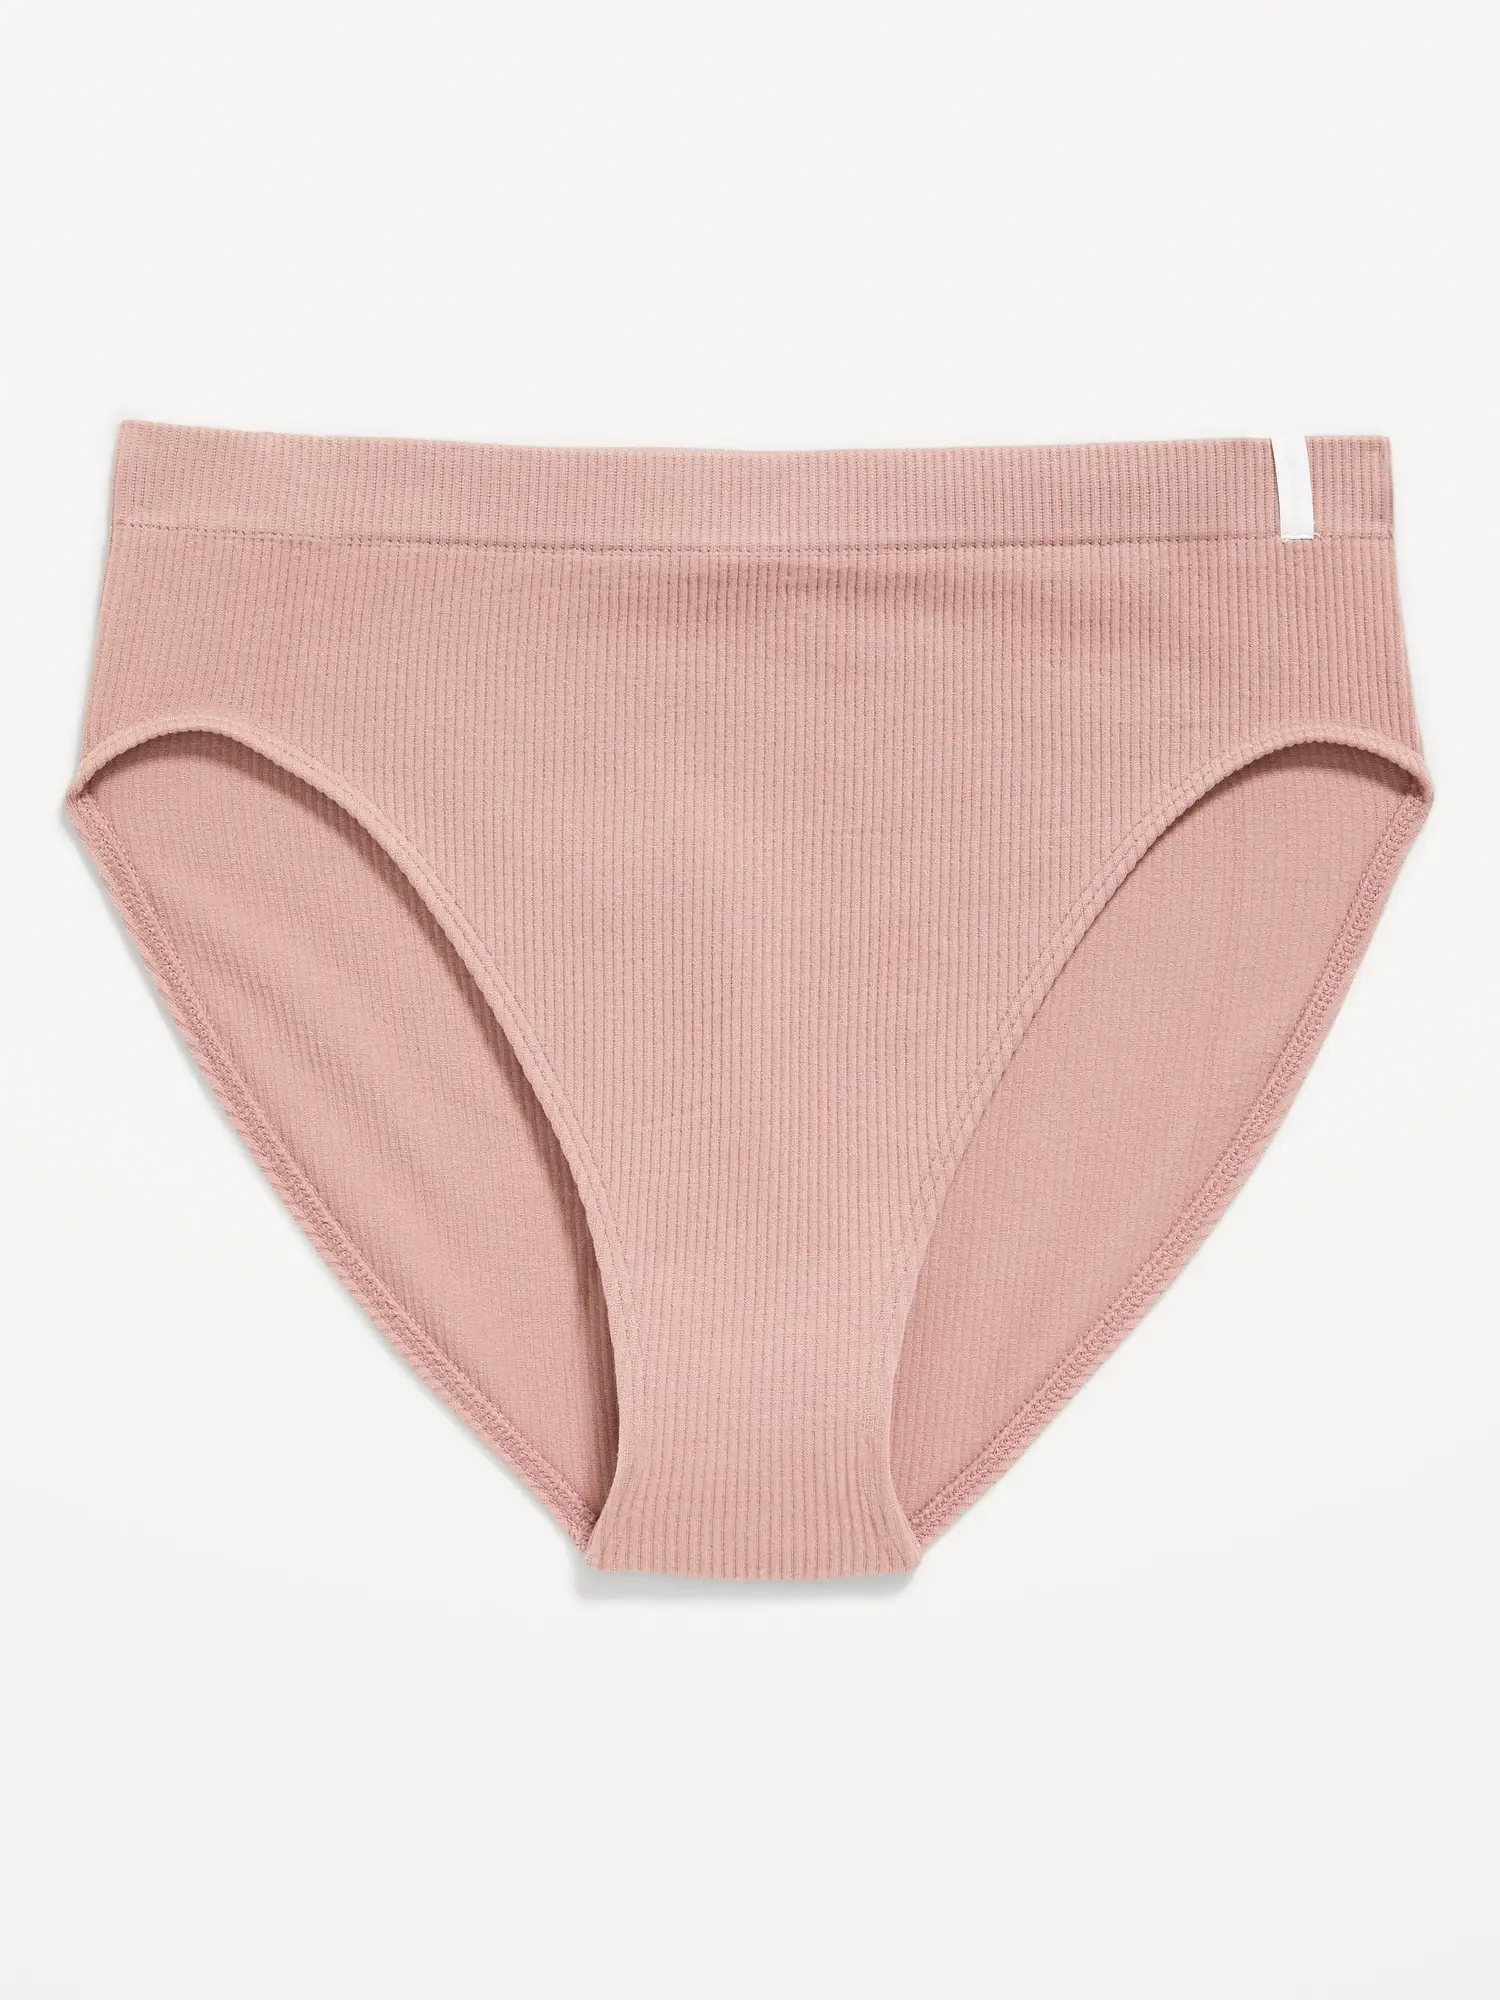 Old Navy High-Waisted French-Cut Seamless Rib-Knit Bikini Underwear for Women pink. 1